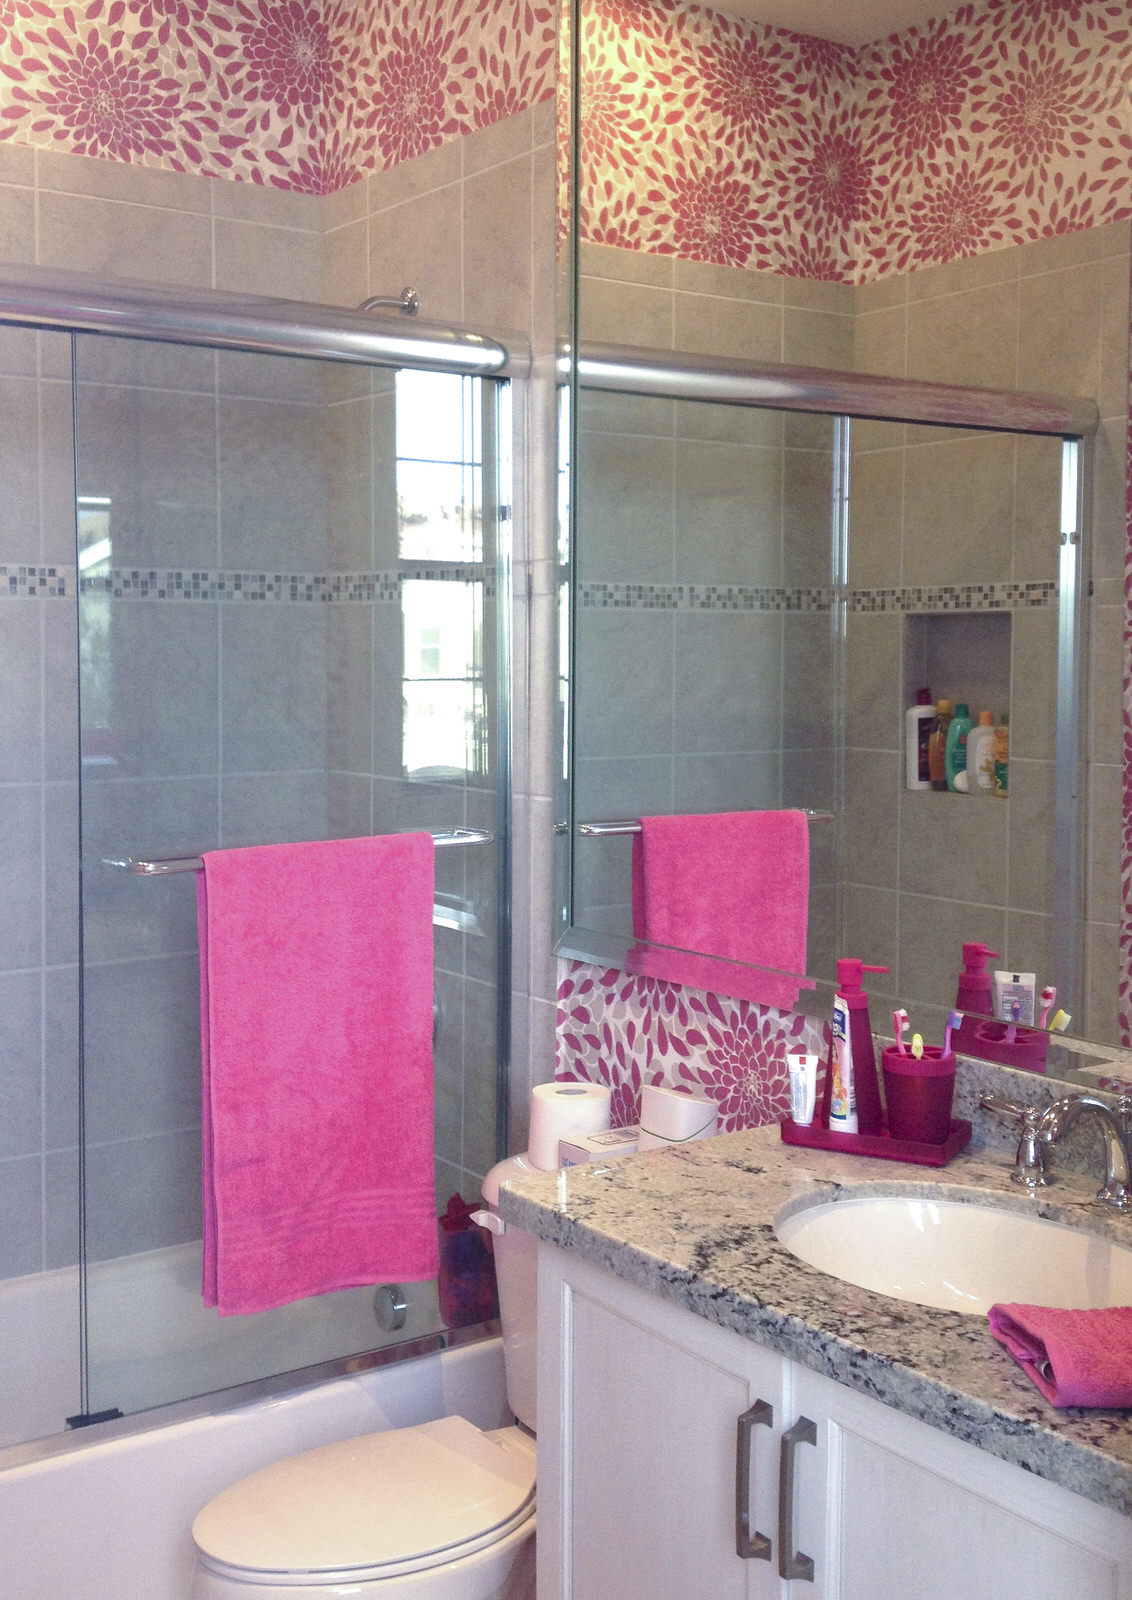 pink themed girls bathroom